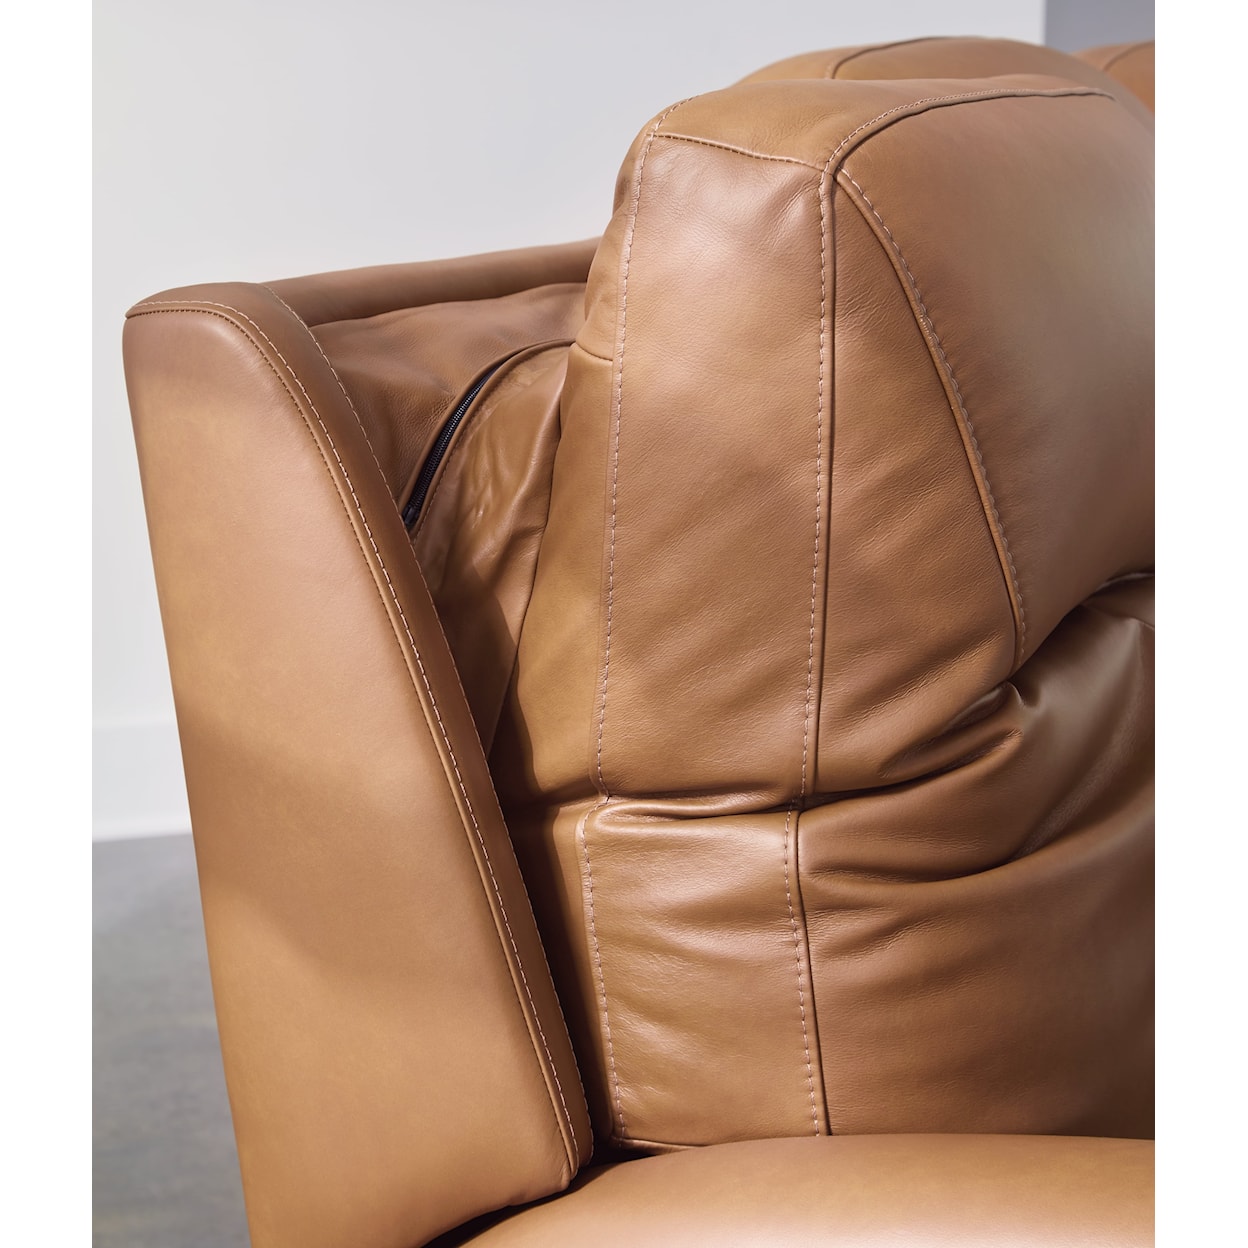 Ashley Furniture Signature Design Tryanny PWR Recliner/ADJ Headrest